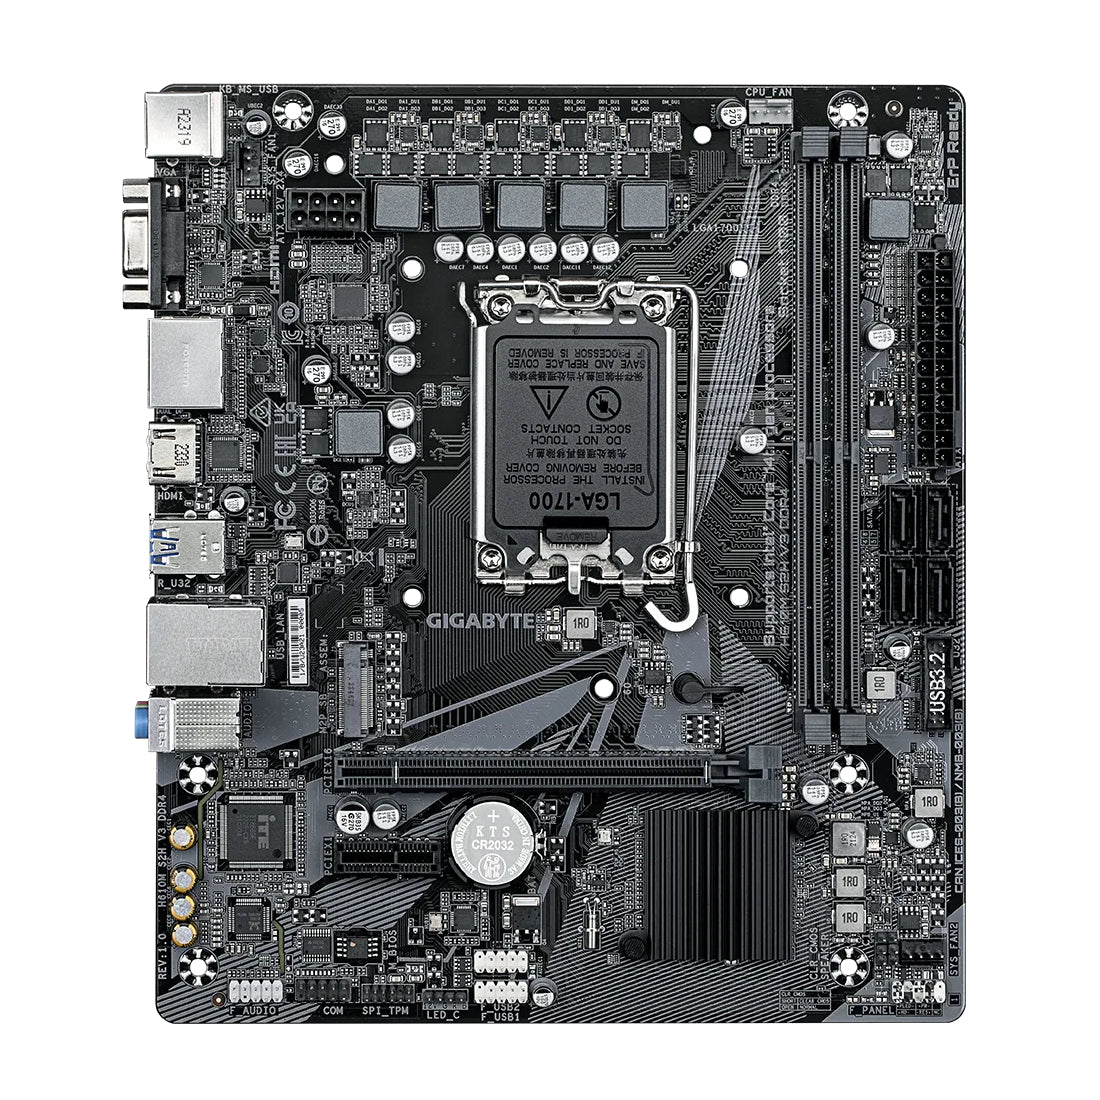 Gigabyte H610M S2H V3 DDR4 LGA1700 Intel Micro ATX 14th Gen Gaming Motherboard - اللوحة الأم - Store 974 | ستور ٩٧٤